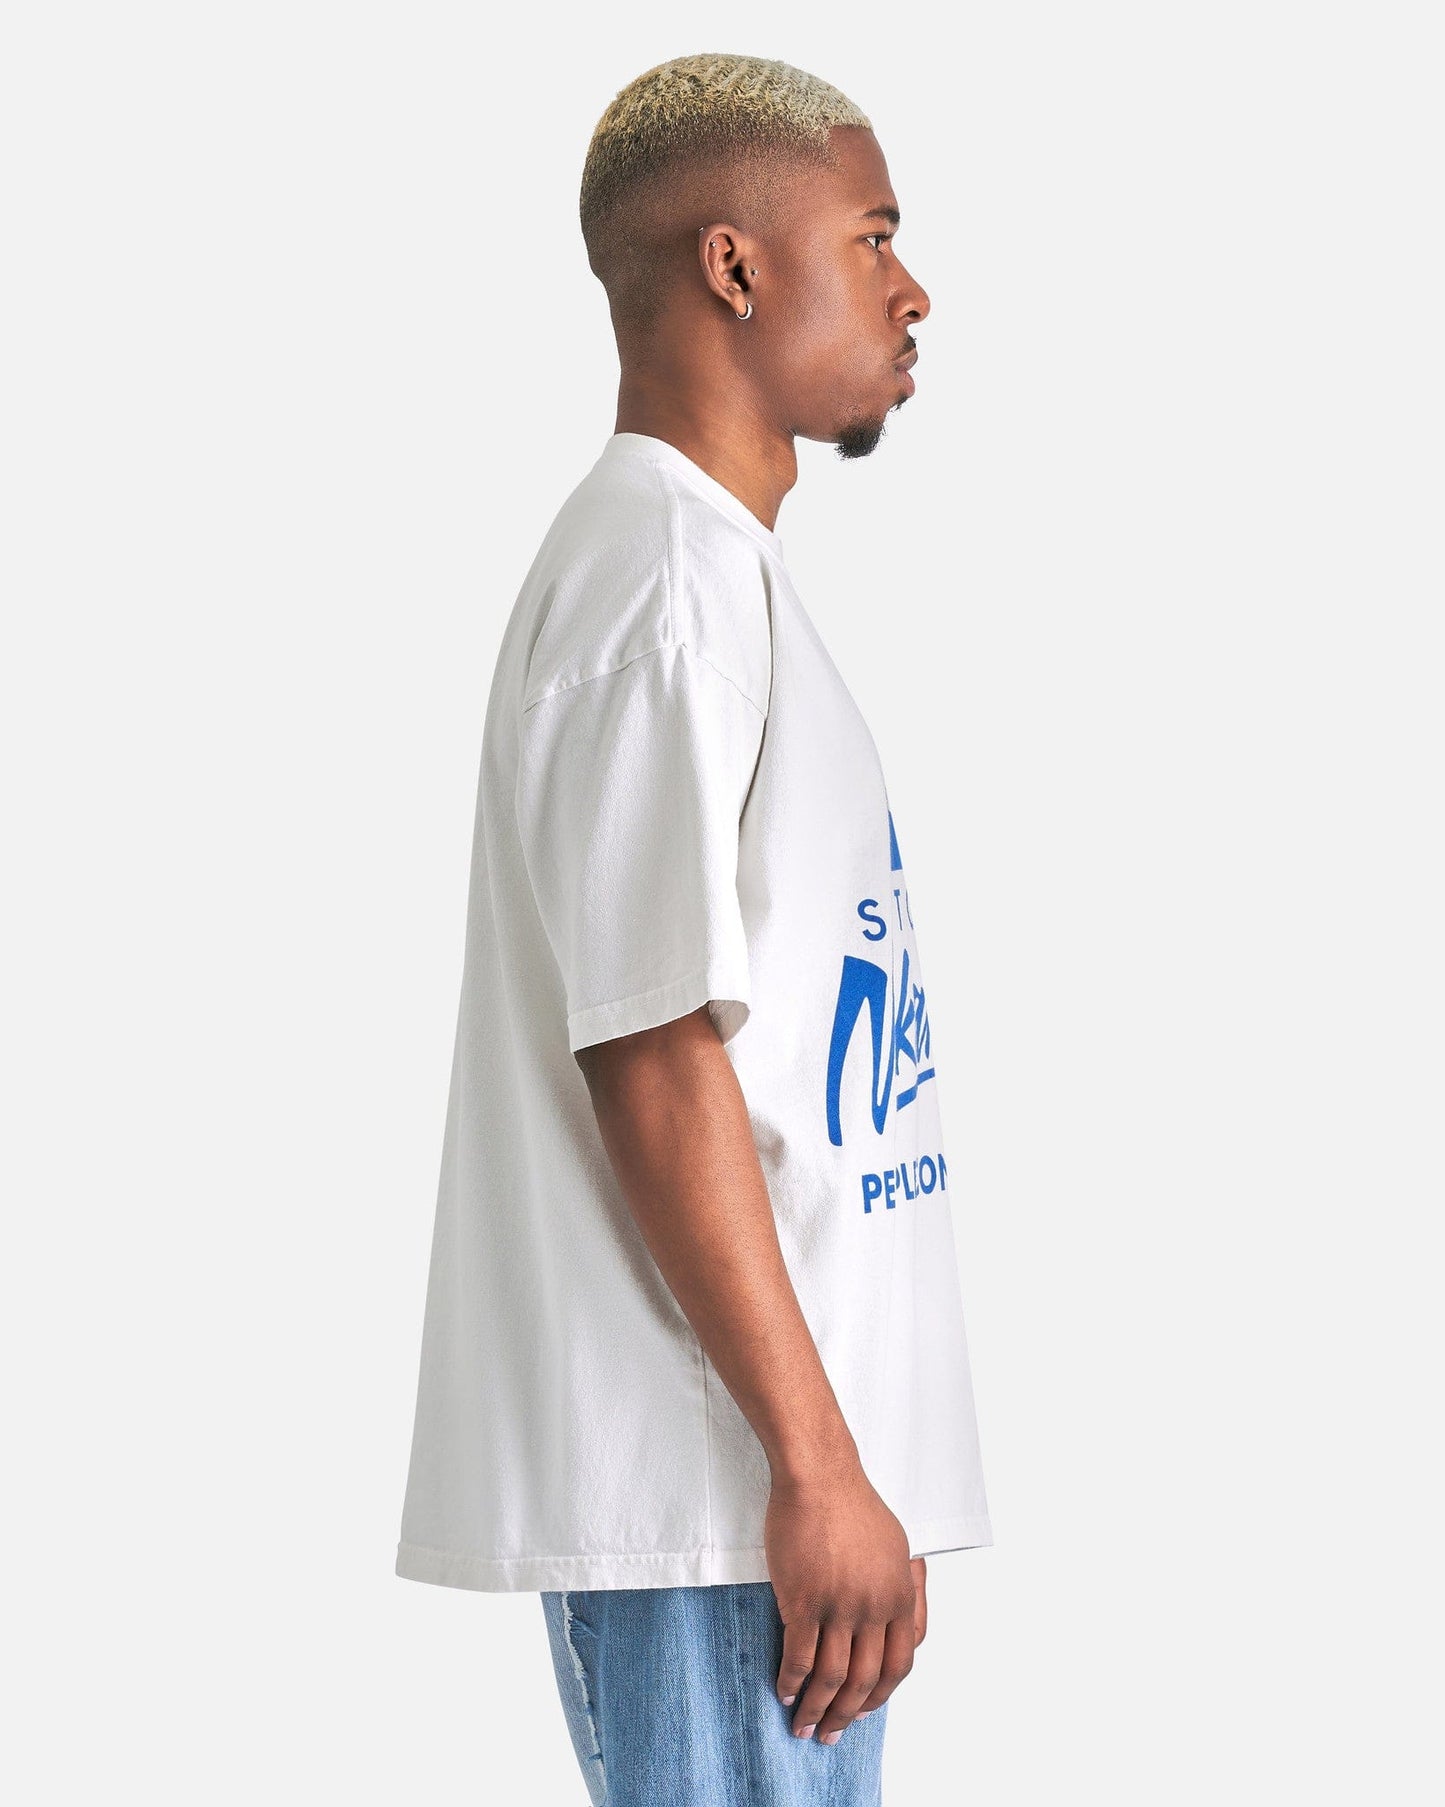 Satoshi Nakamoto Men's T-Shirts Dial Up T-Shirt in White